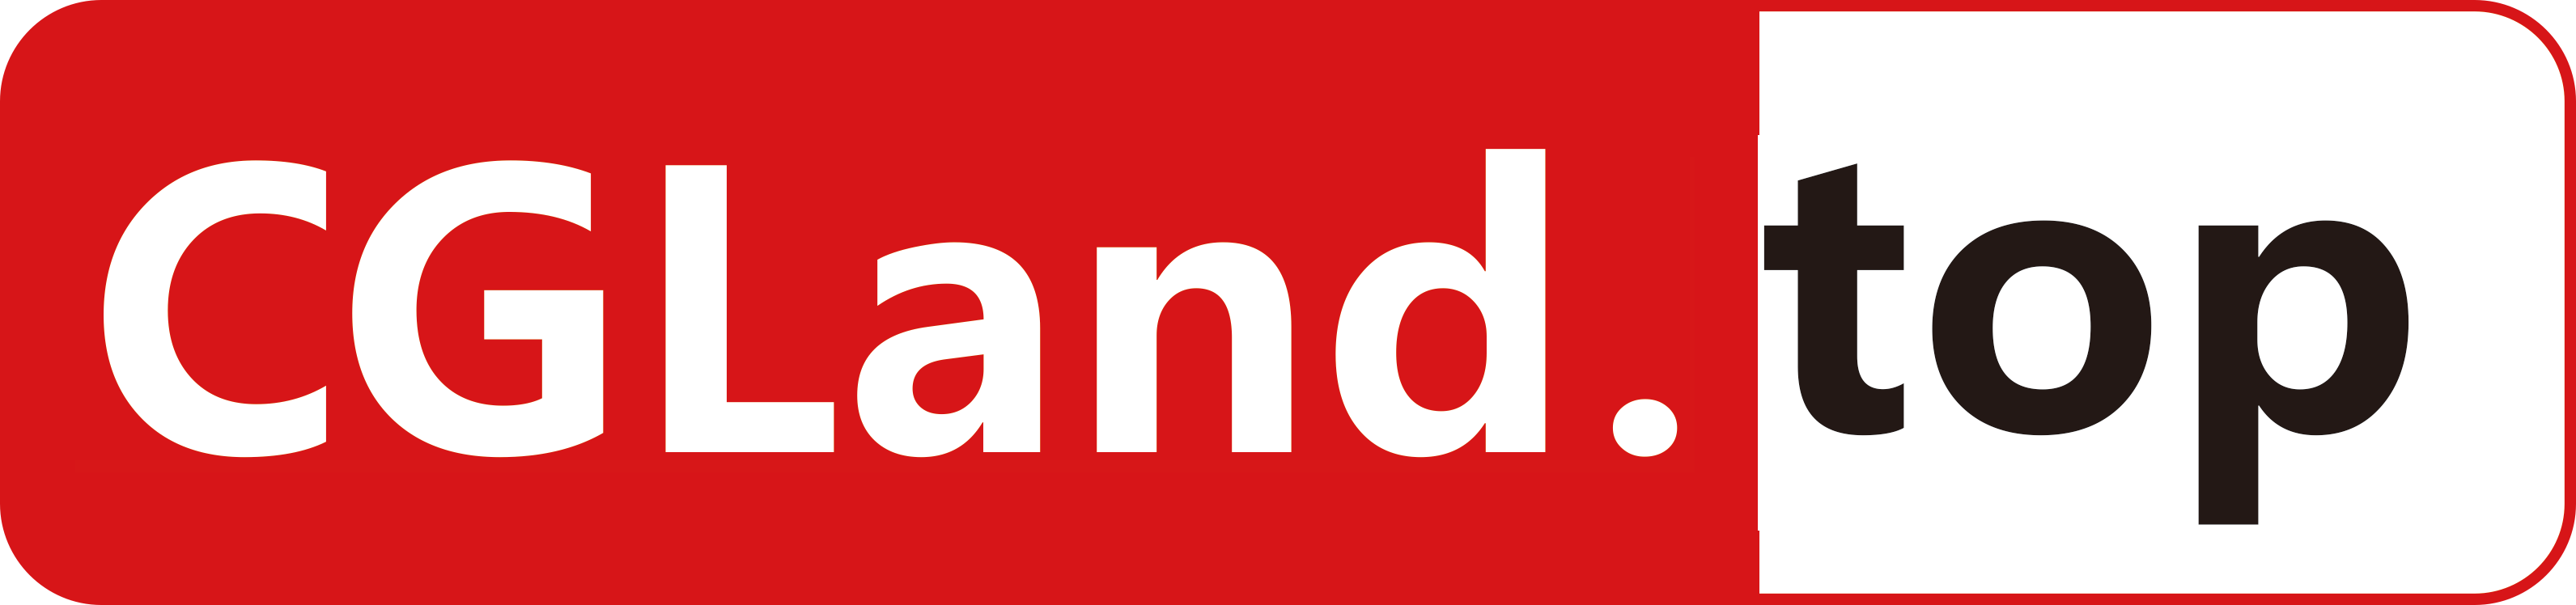 CGLand-logo